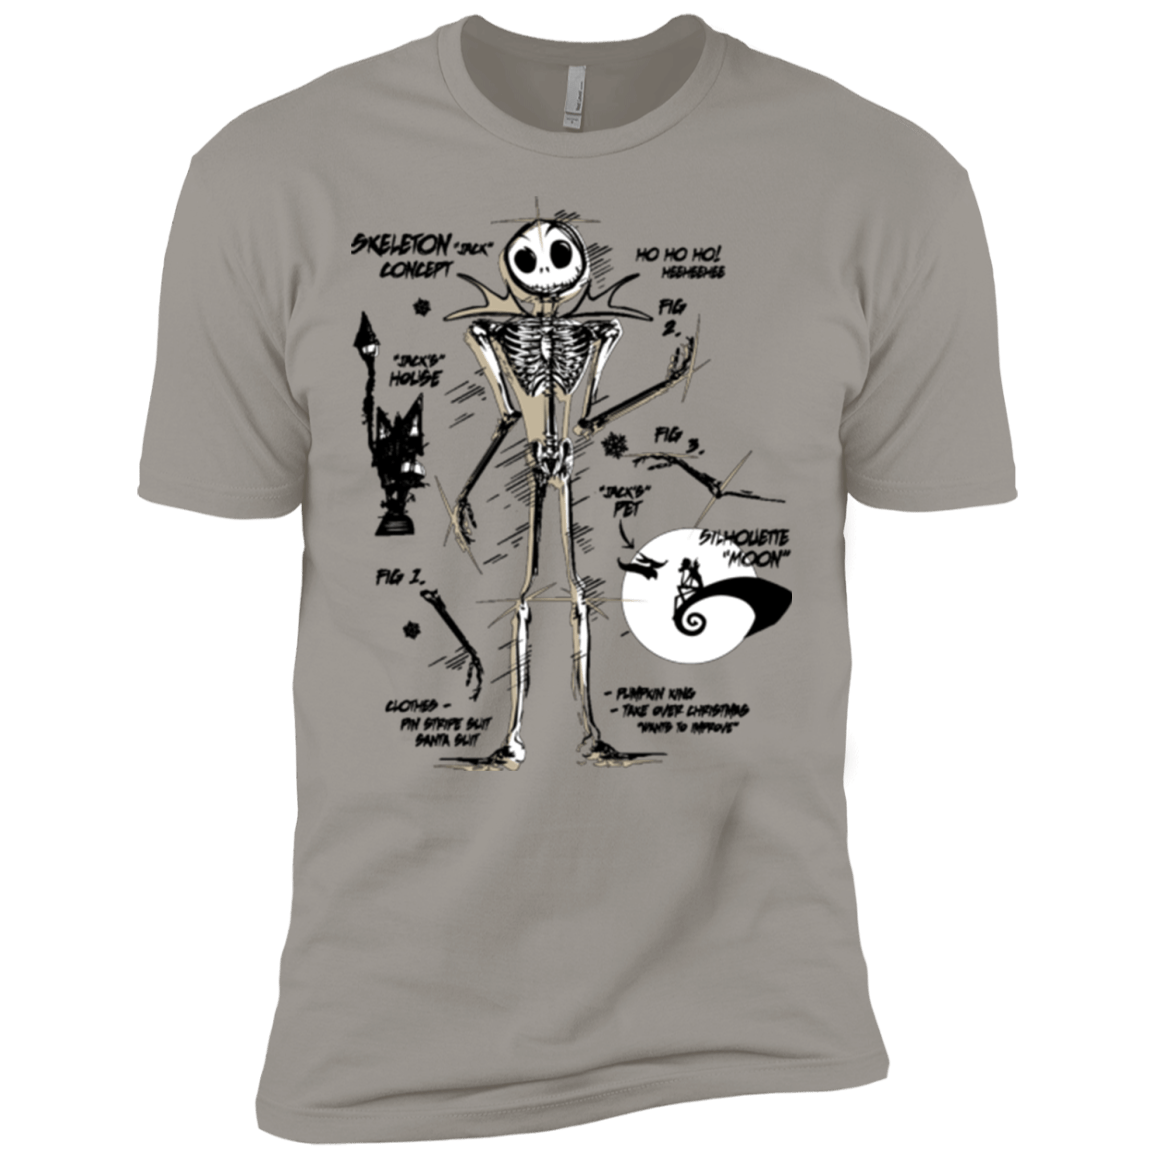 T-Shirts Light Grey / X-Small Skeleton Concept Men's Premium T-Shirt